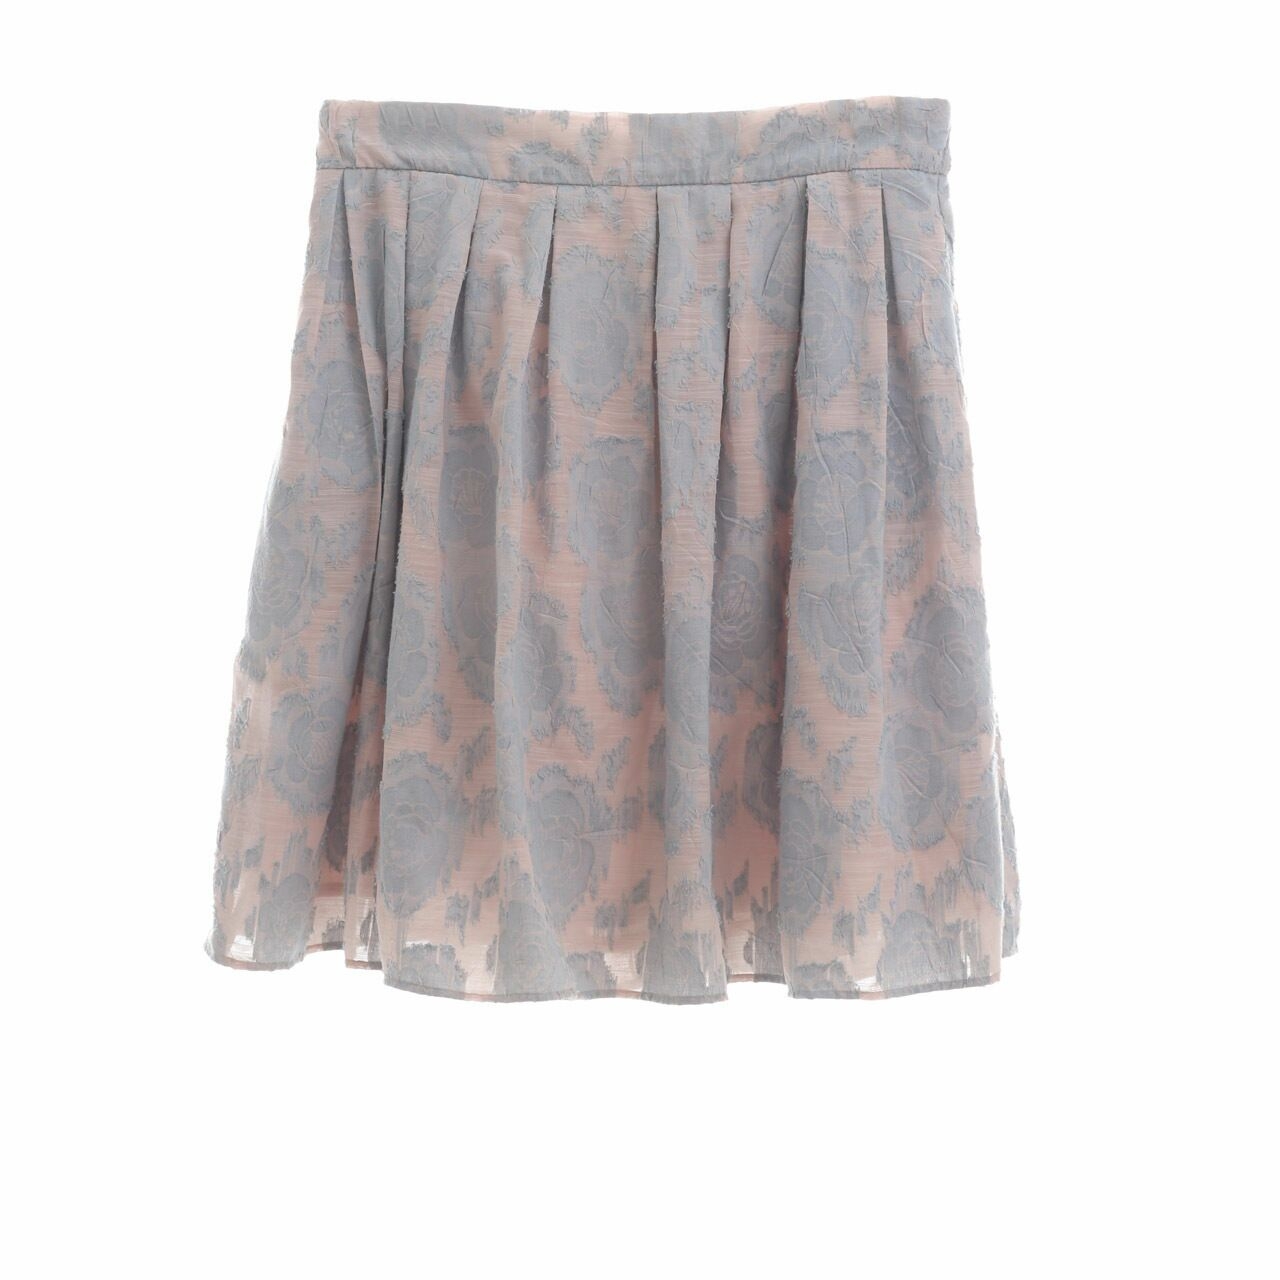 Minimal Peach/Grey Patterned Floral Midi Skirt